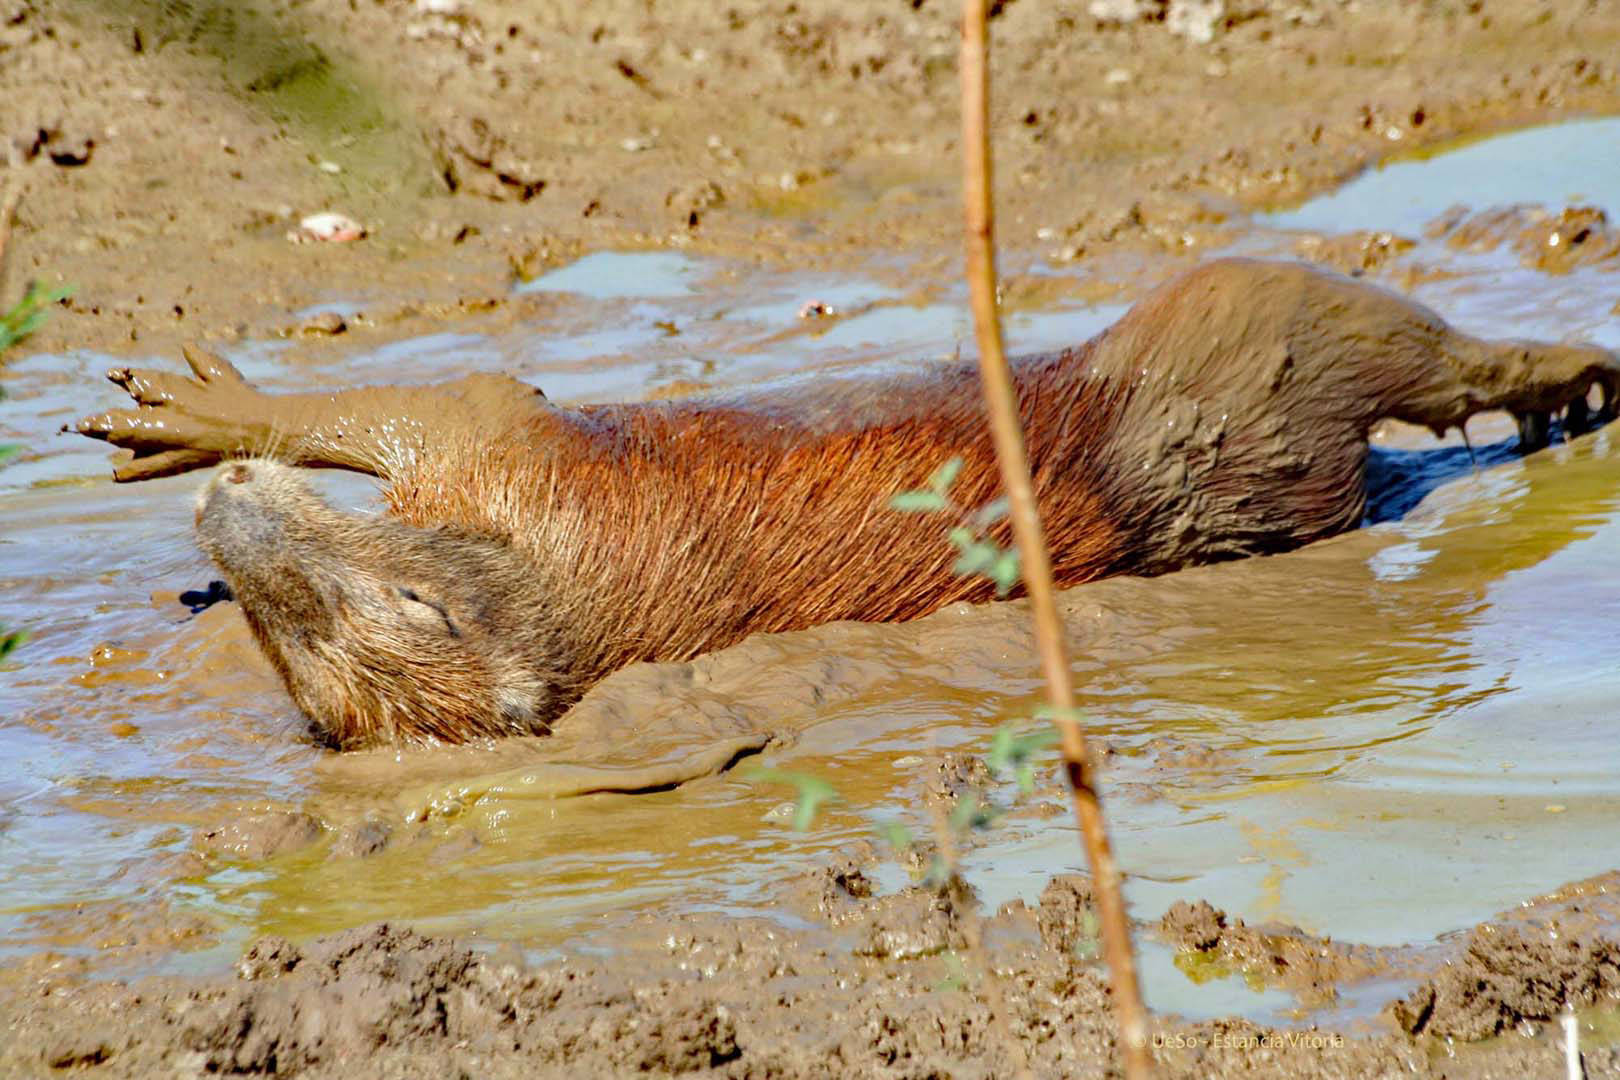 Capybara suulting in the mud